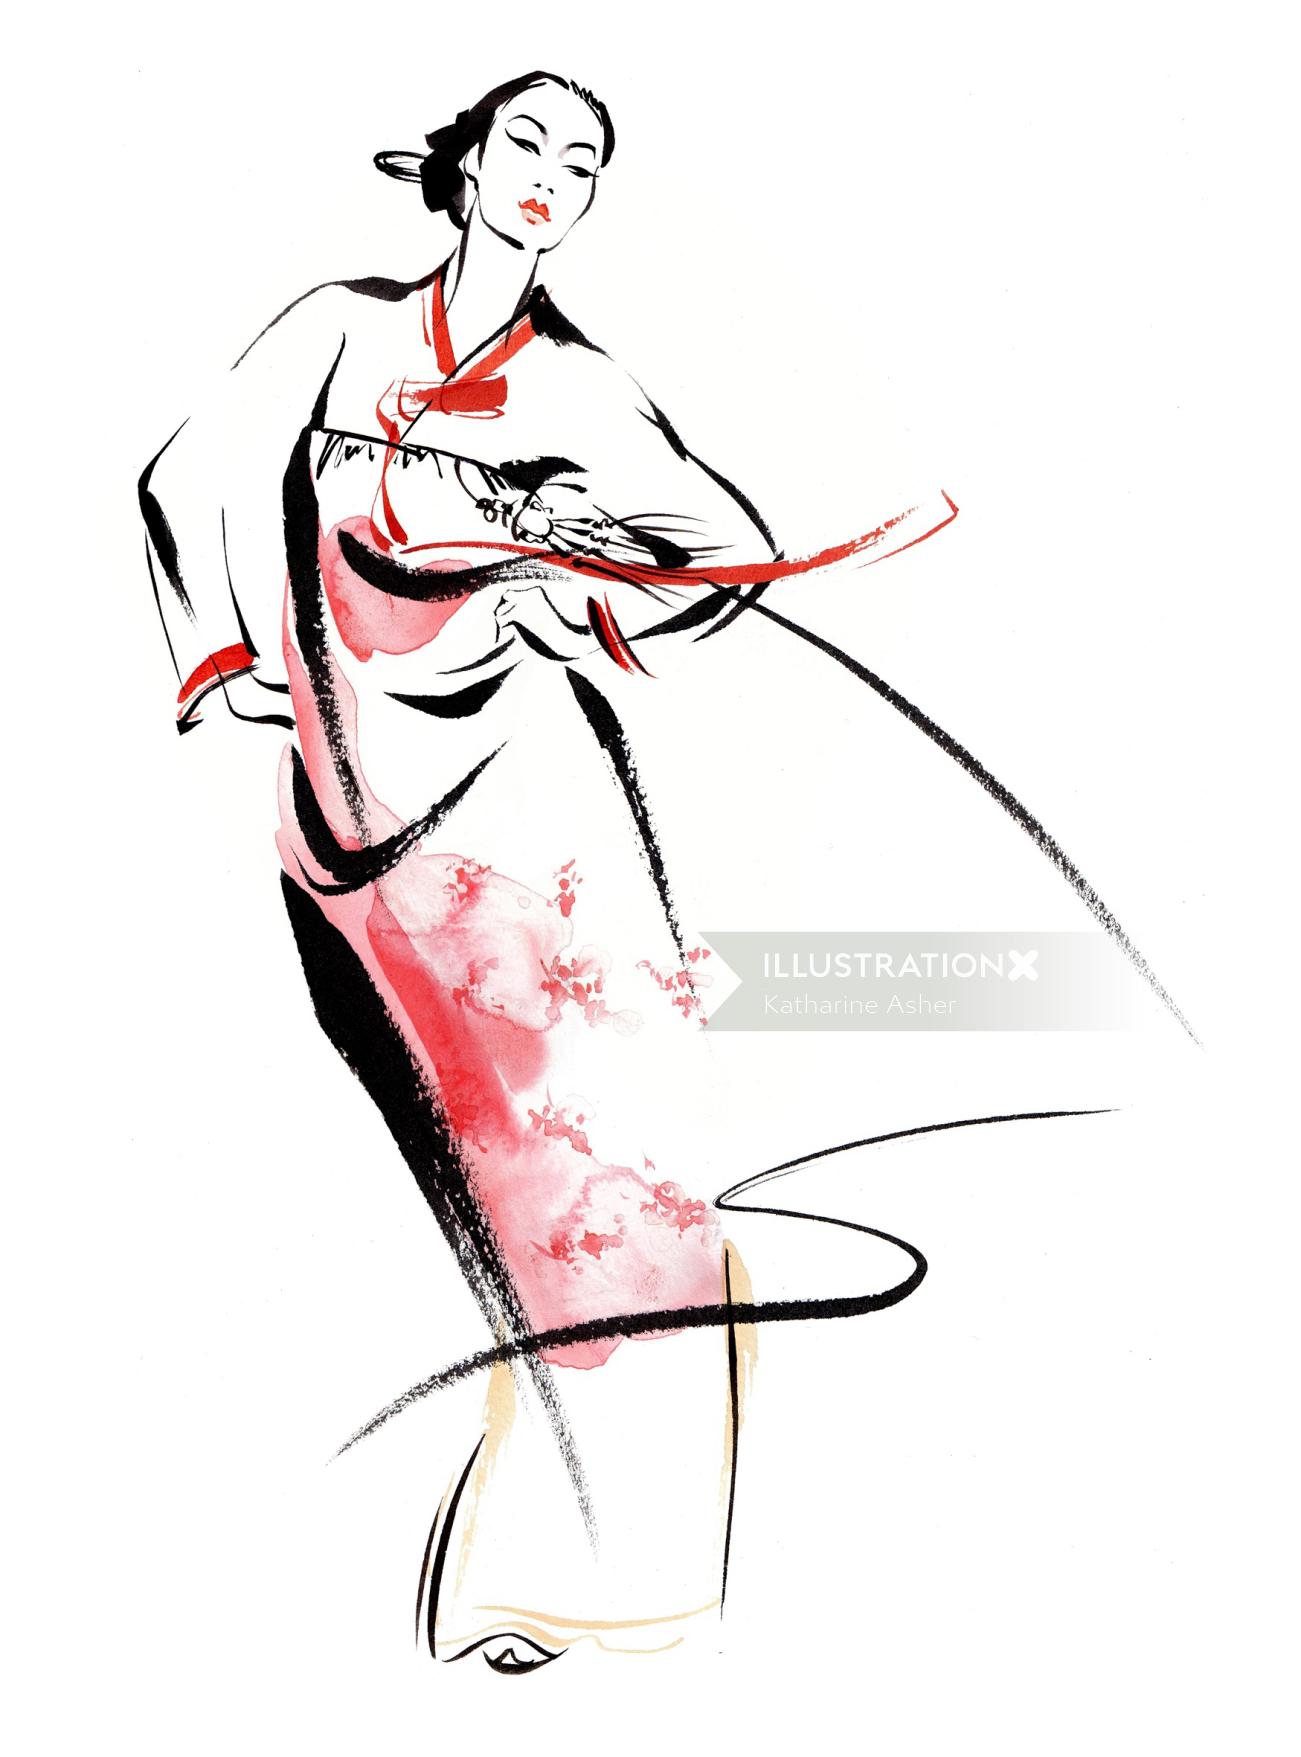 Ilustración de vestimenta tradicional coreana de Katharine Asher